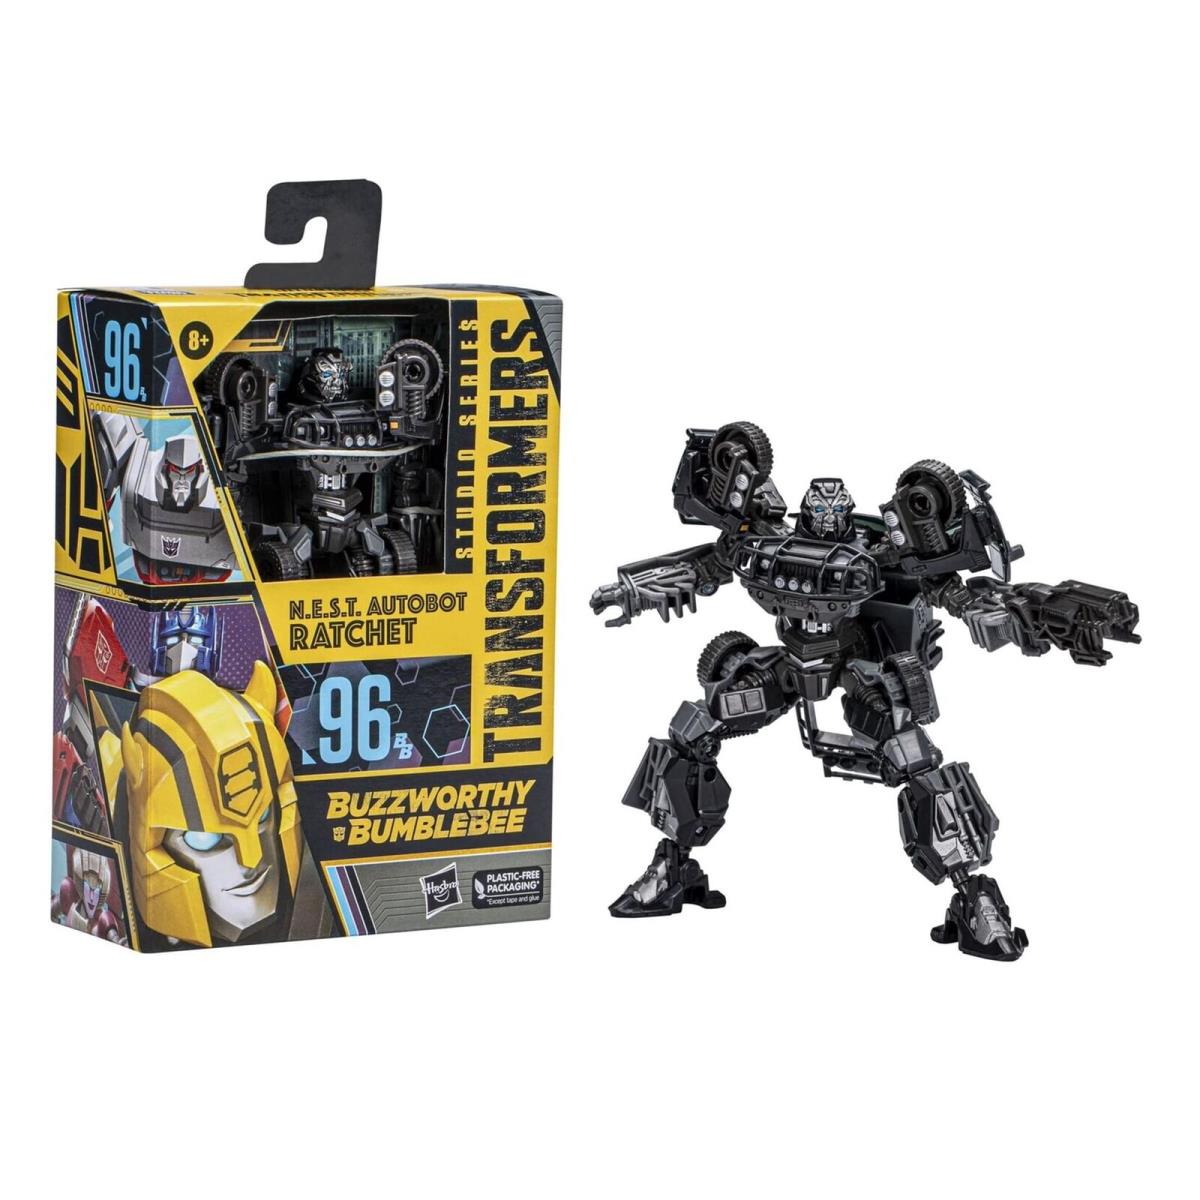 Transformers Studio Series 96 Buzzworthy Bumblebee N.e.s.t. Autobot Ratchet